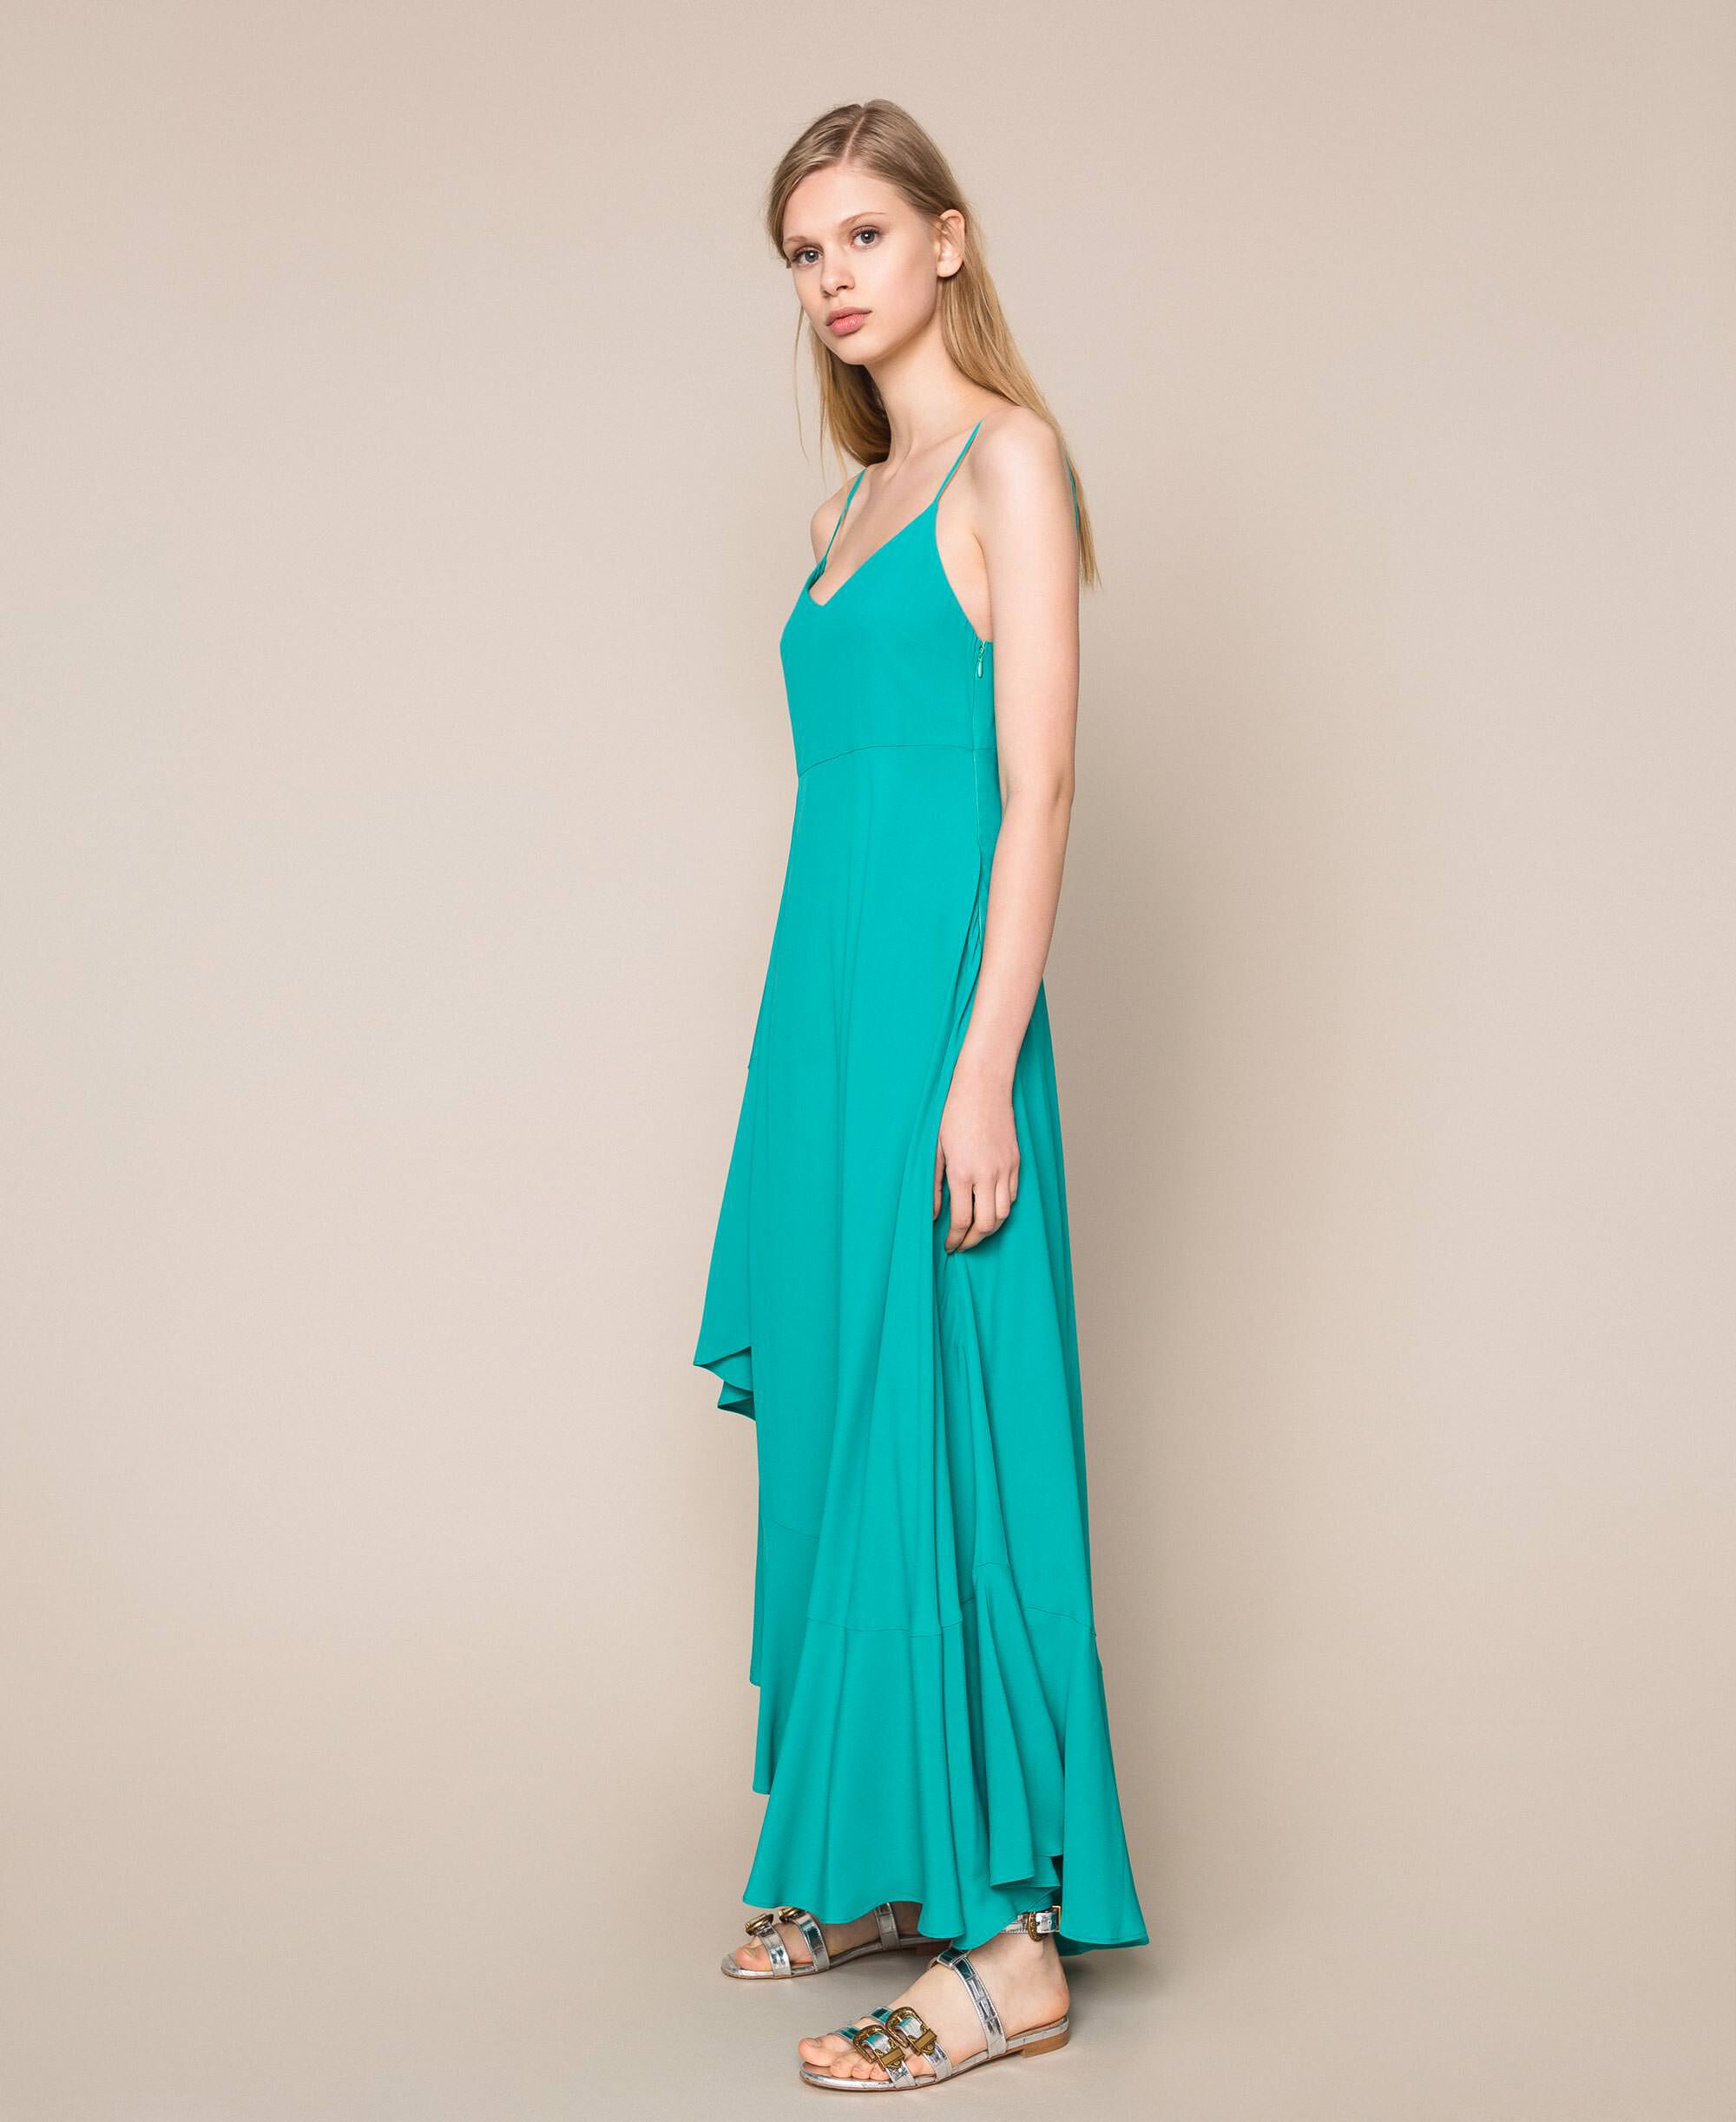 Leaf Green Dress Outlet Shop, UP TO 56% OFF | www 